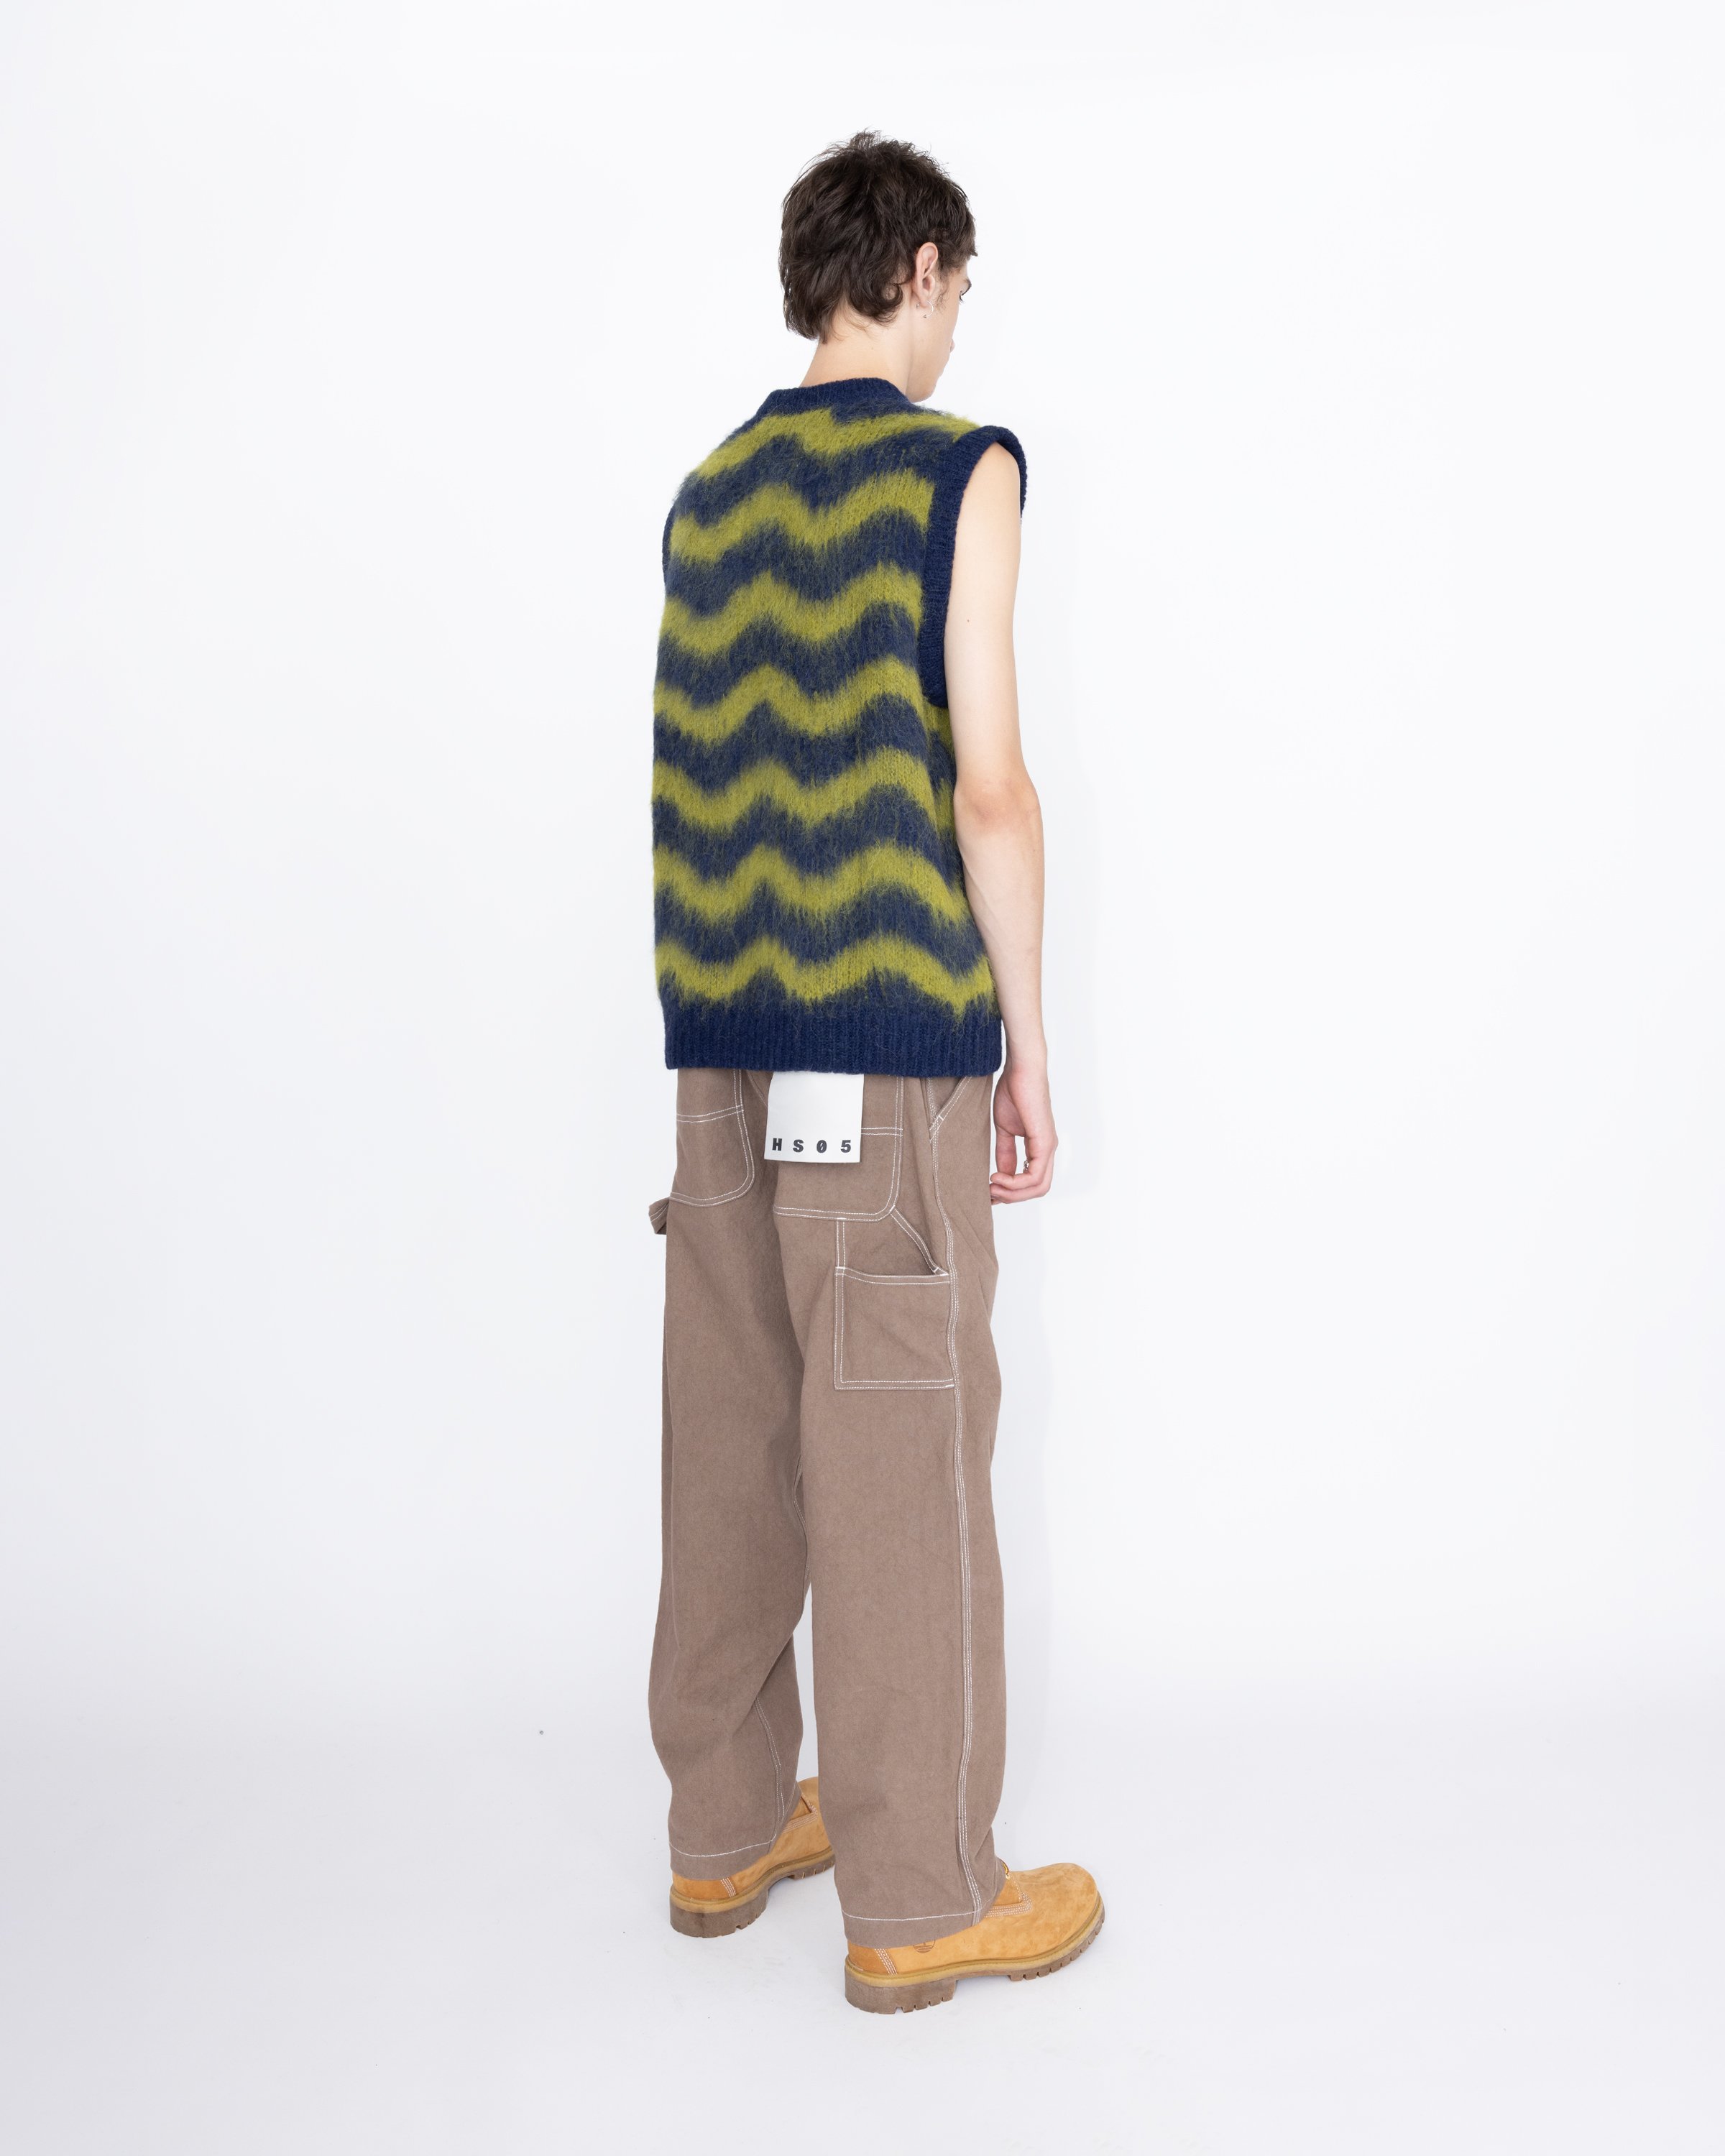 Highsnobiety HS05 - Alpaca Fuzzy Wave Sweater Vest Navy/Olive green - Clothing - Multi - Image 5